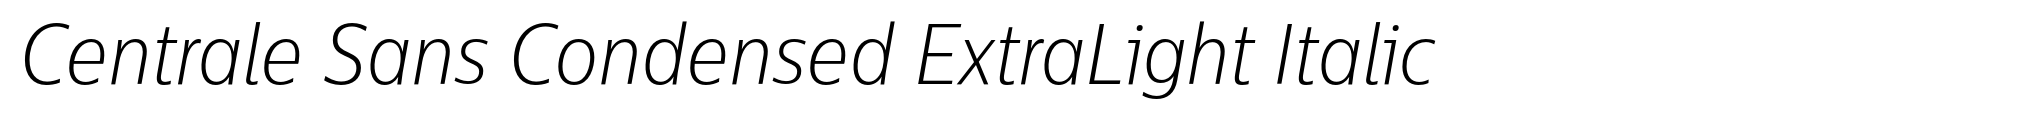 Centrale Sans Condensed ExtraLight Italic image